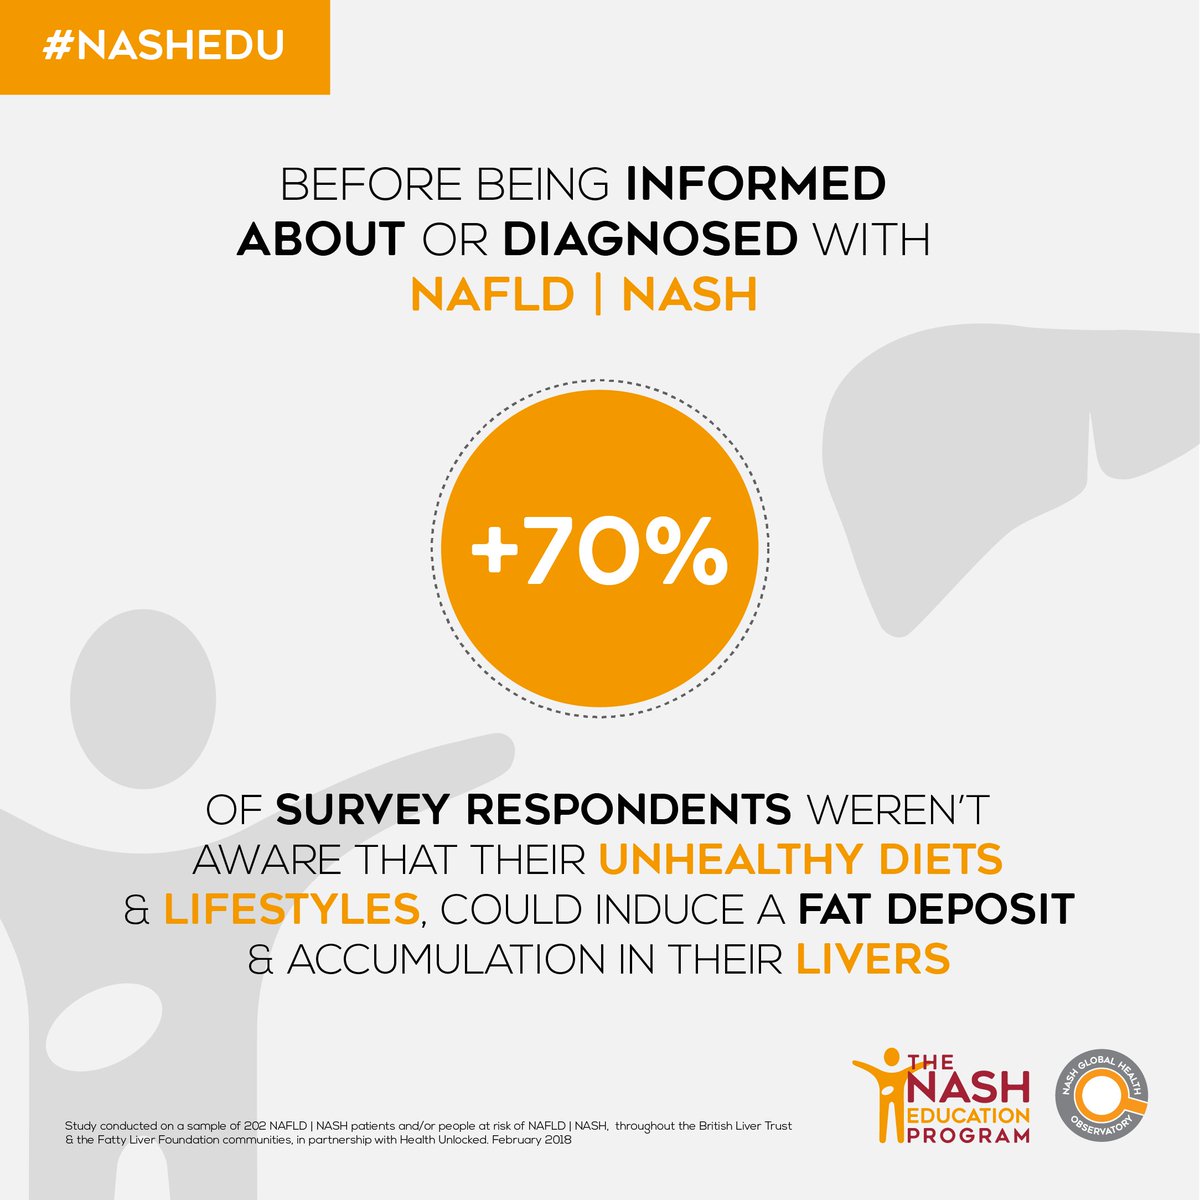 #NASHedu: #patients and #atriskpopulation need more information about links between #diet & #liverconditions! #patienteducation #publicawareness. Spread the word by RT! #diseaseawareness #NAFLD #NASH